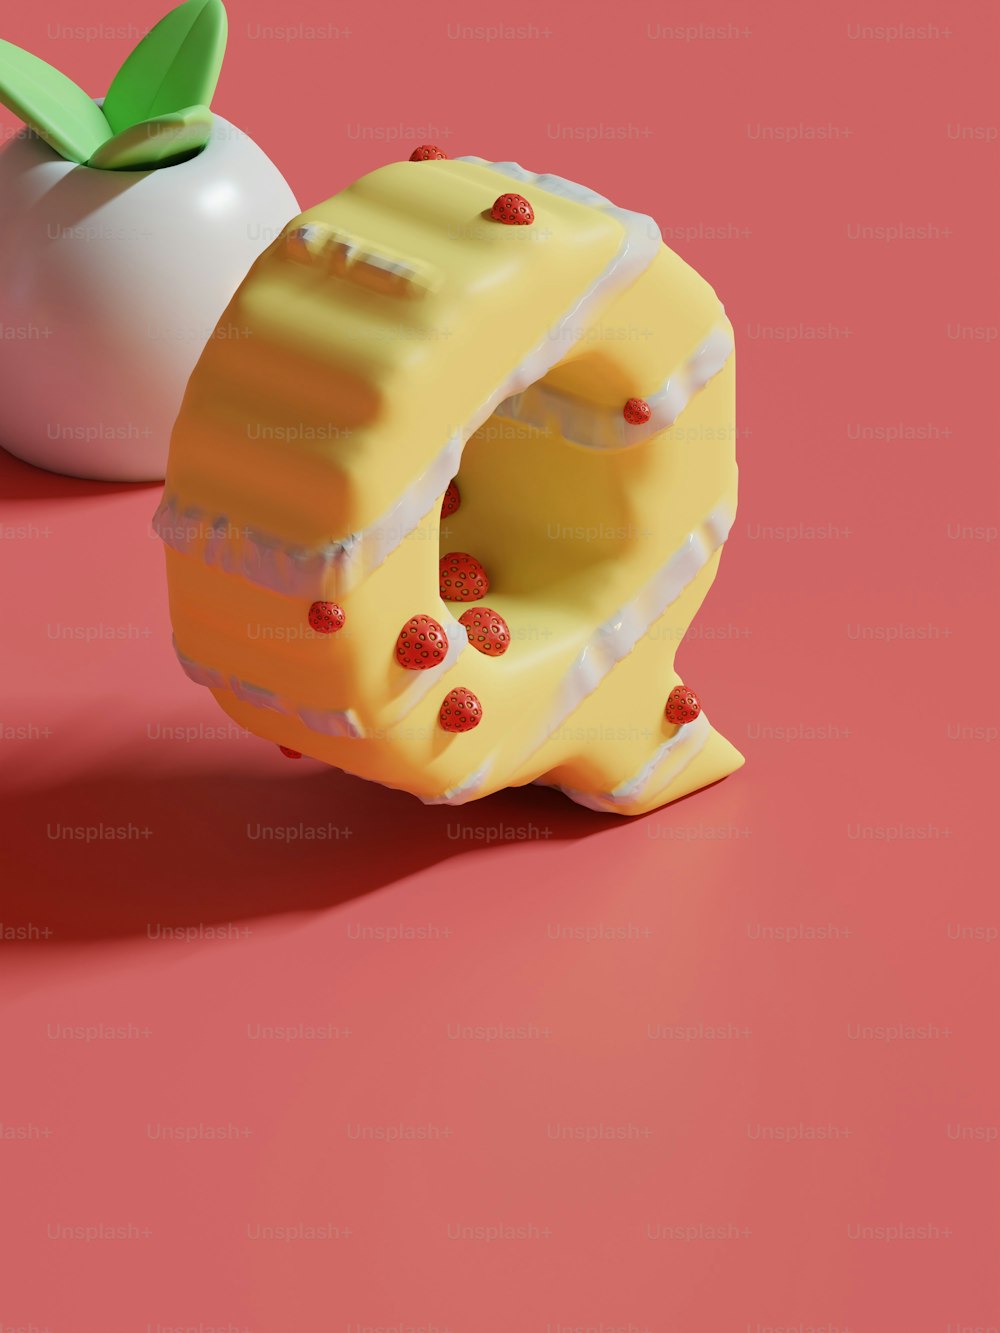 Un pezzo di torta accanto a una mela su una superficie rosa